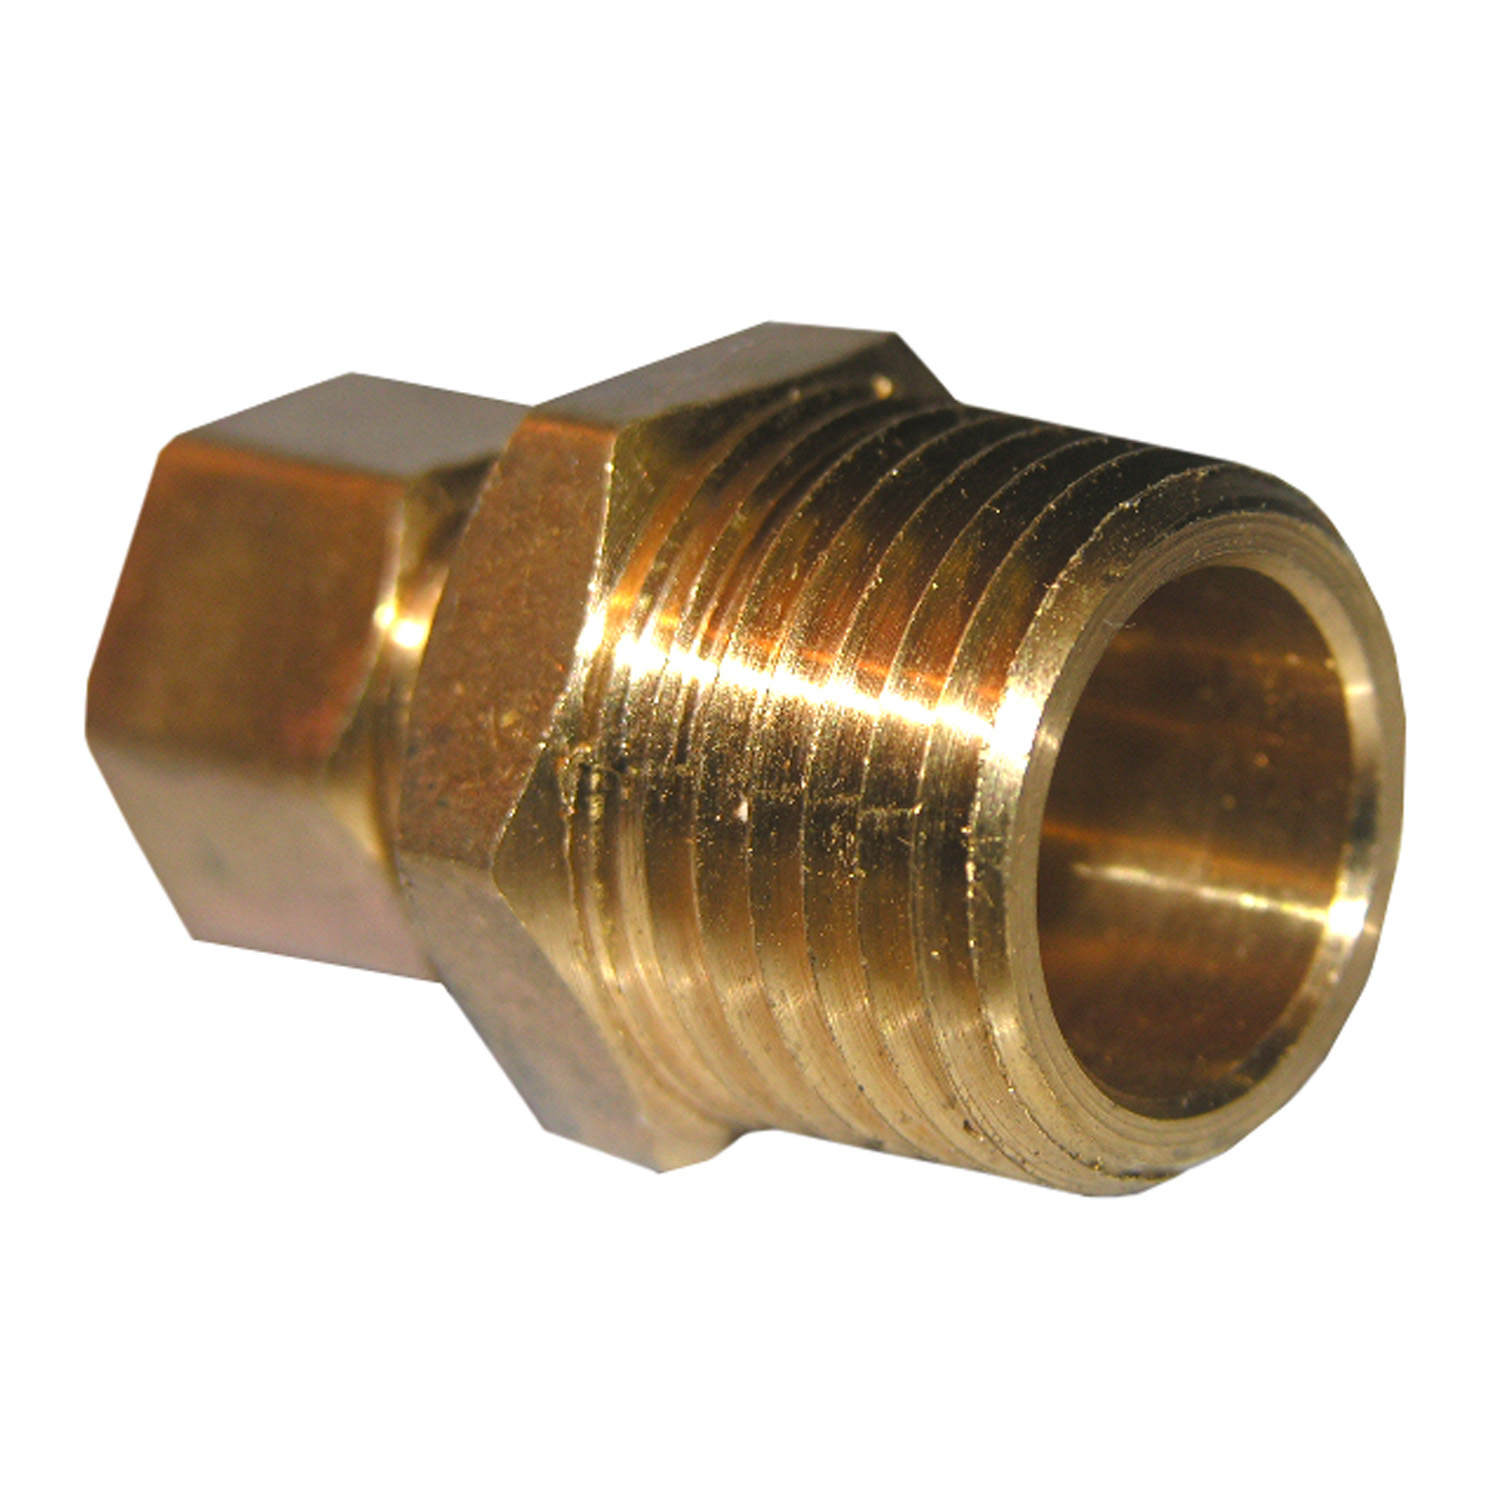 17-6837 Pipe Adapter, 3/8 x 1/2 in, Compression x MPT, Brass, 150 psi Pressure